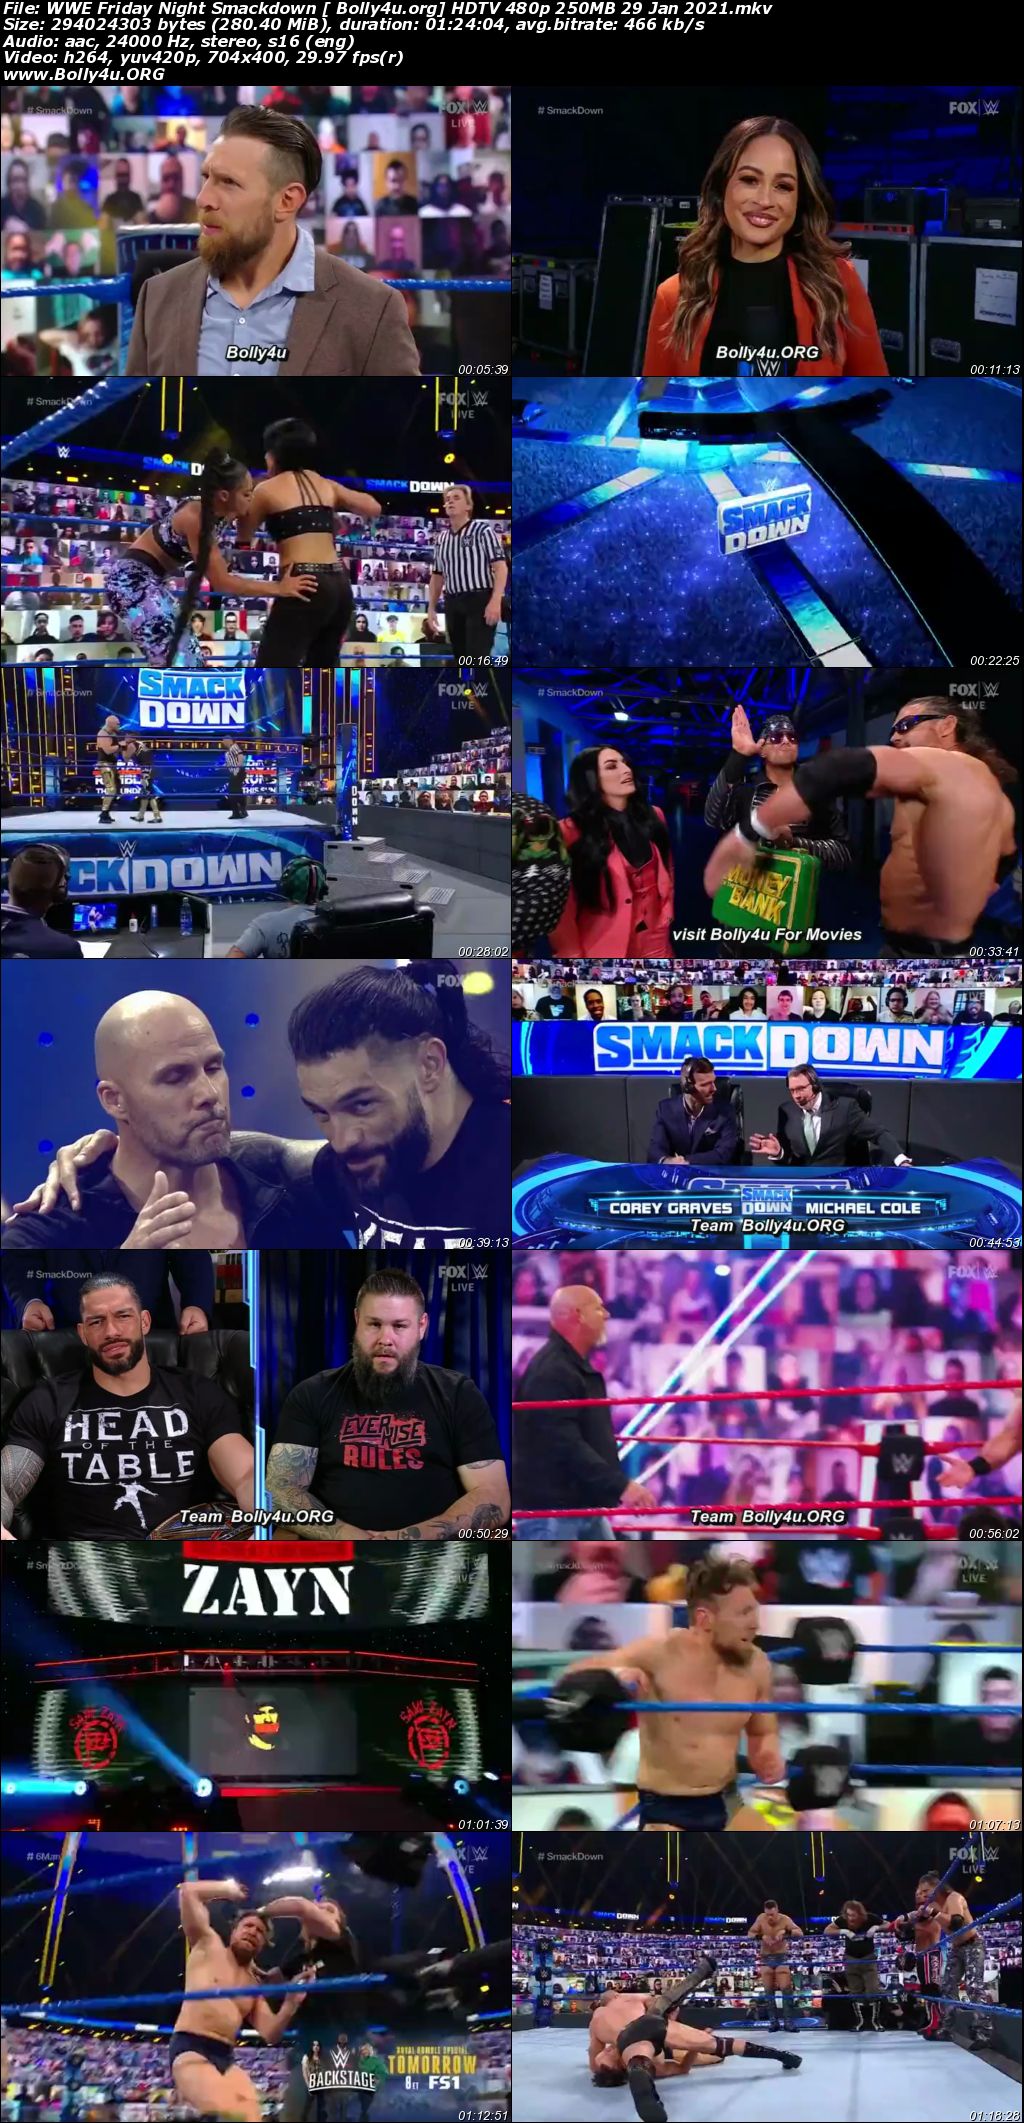 WWE Friday Night Smackdown HDTV 480p 250MB 29 Jan 2021 Download